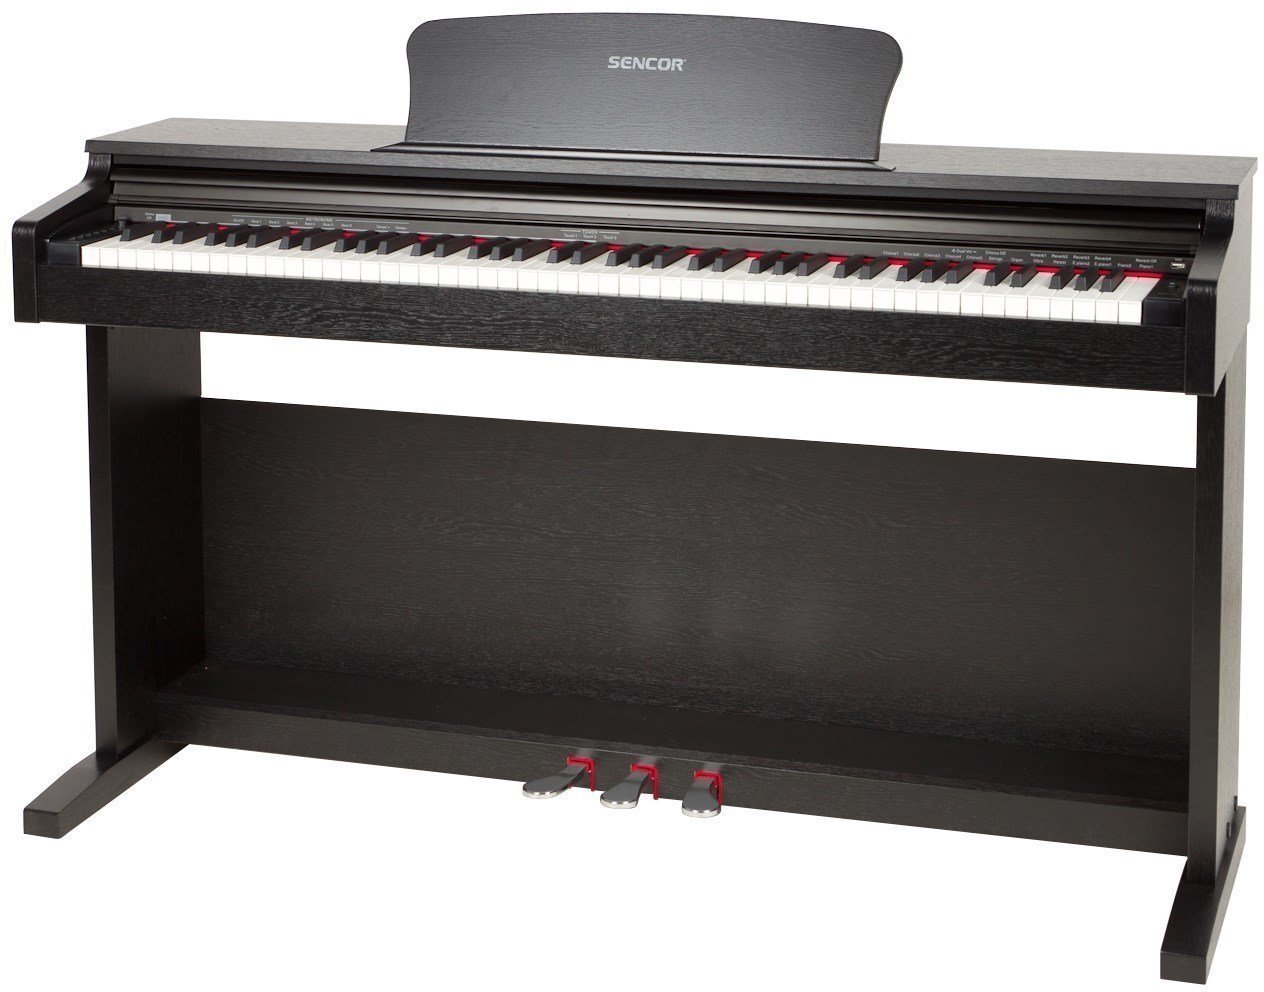 Digital Piano SENCOR SDP 100 Sort Digital Piano